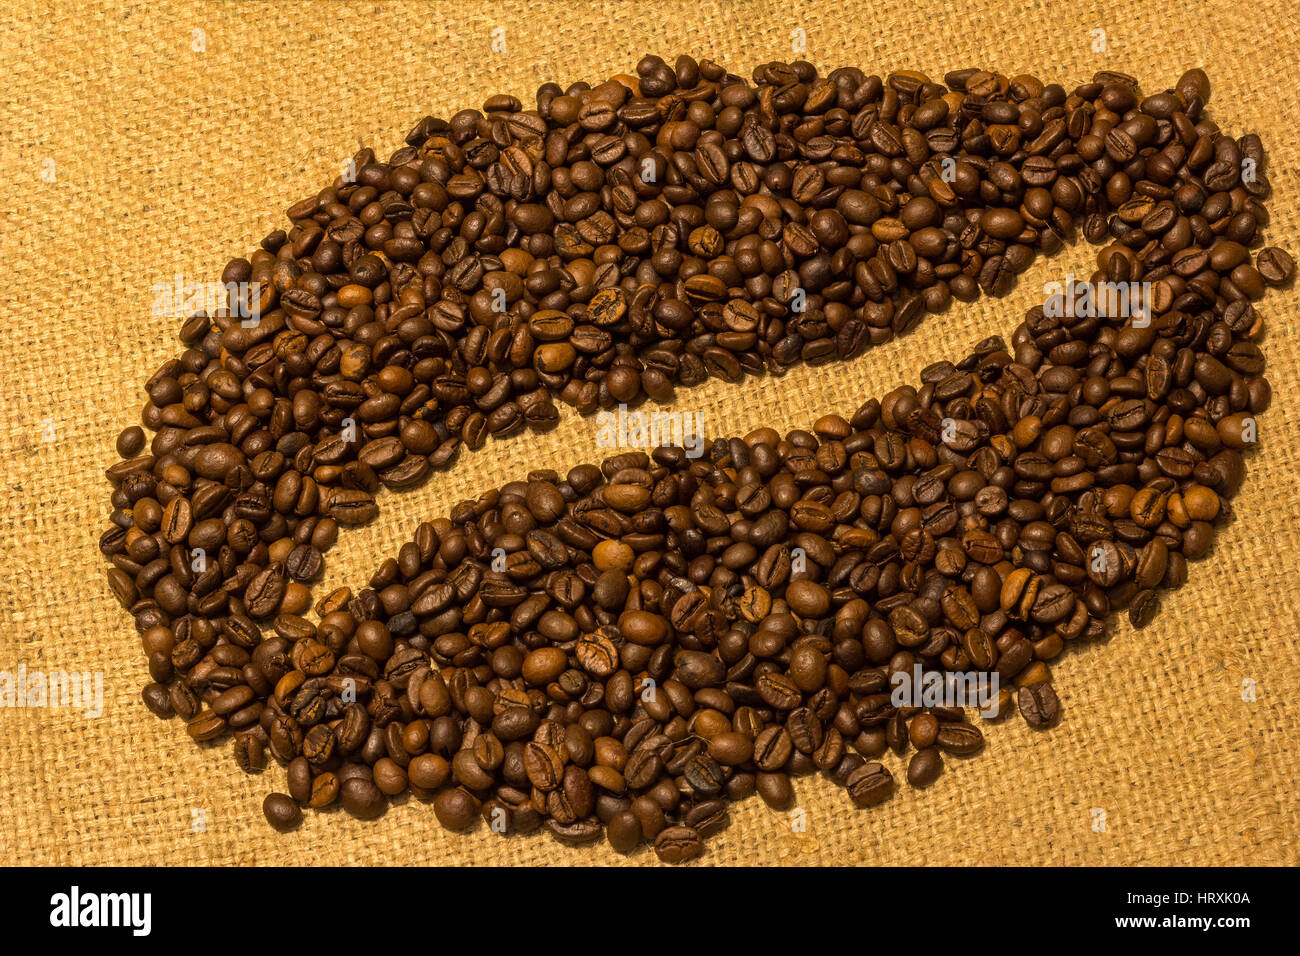 https://c8.alamy.com/compes/hrxk0a/una-gran-abstraccion-hecha-de-muchos-granos-de-cafe-granos-de-cafe-real-hrxk0a.jpg